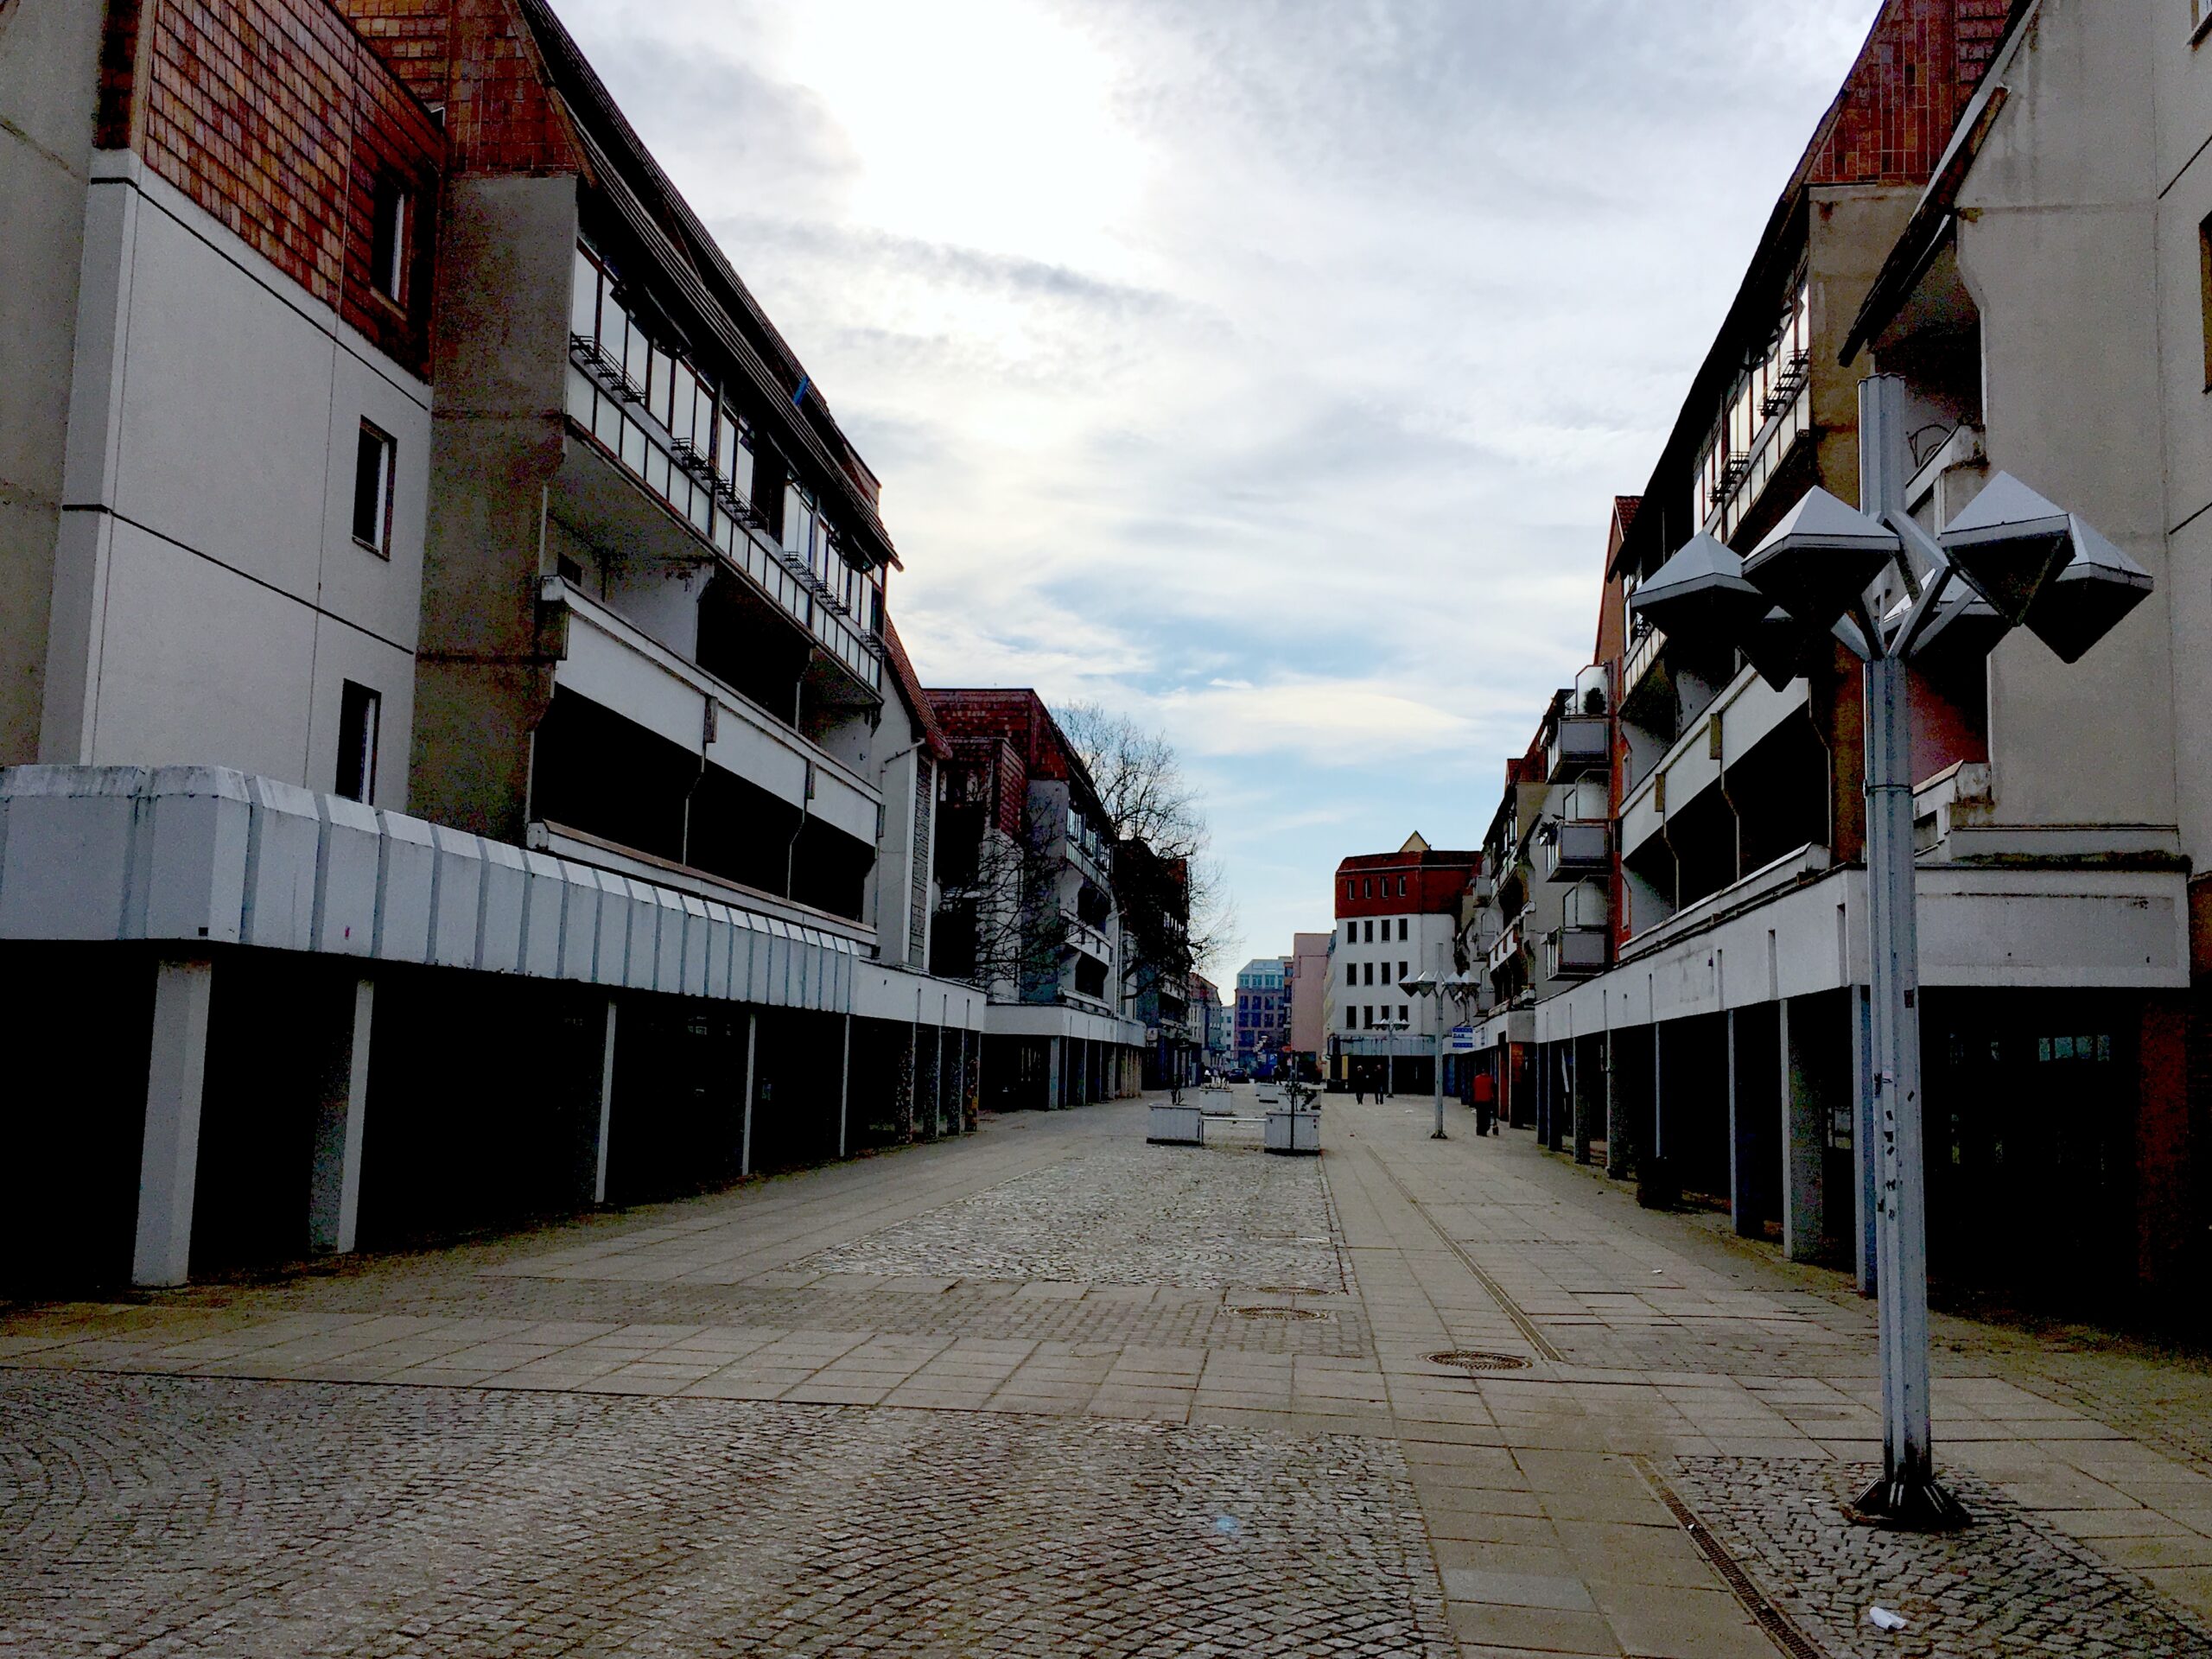 Central European empty street